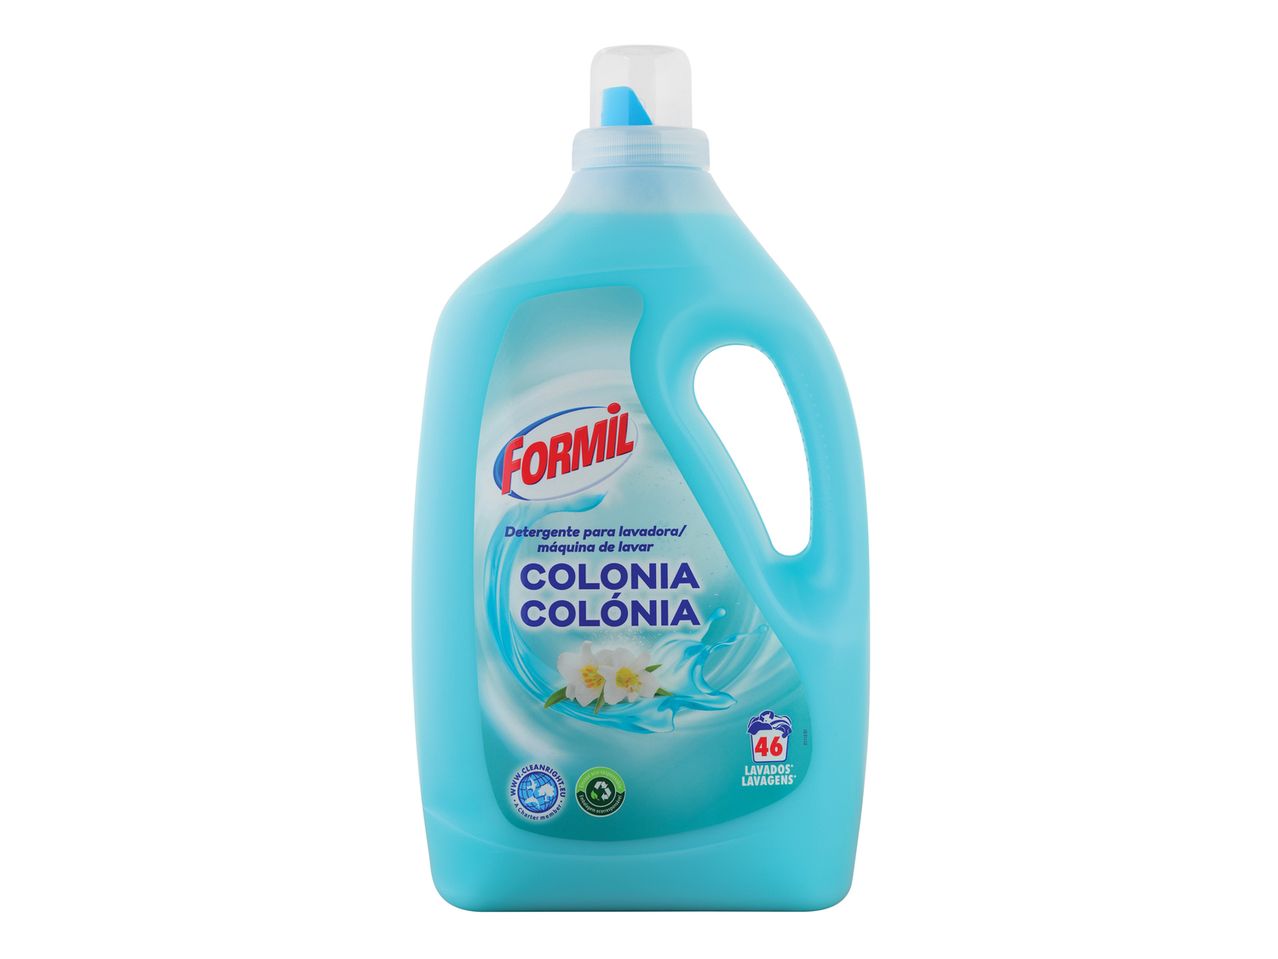 Ver empliada: Formil® Detergente Líquido Aloé Vera / Colónia - Imagem 2